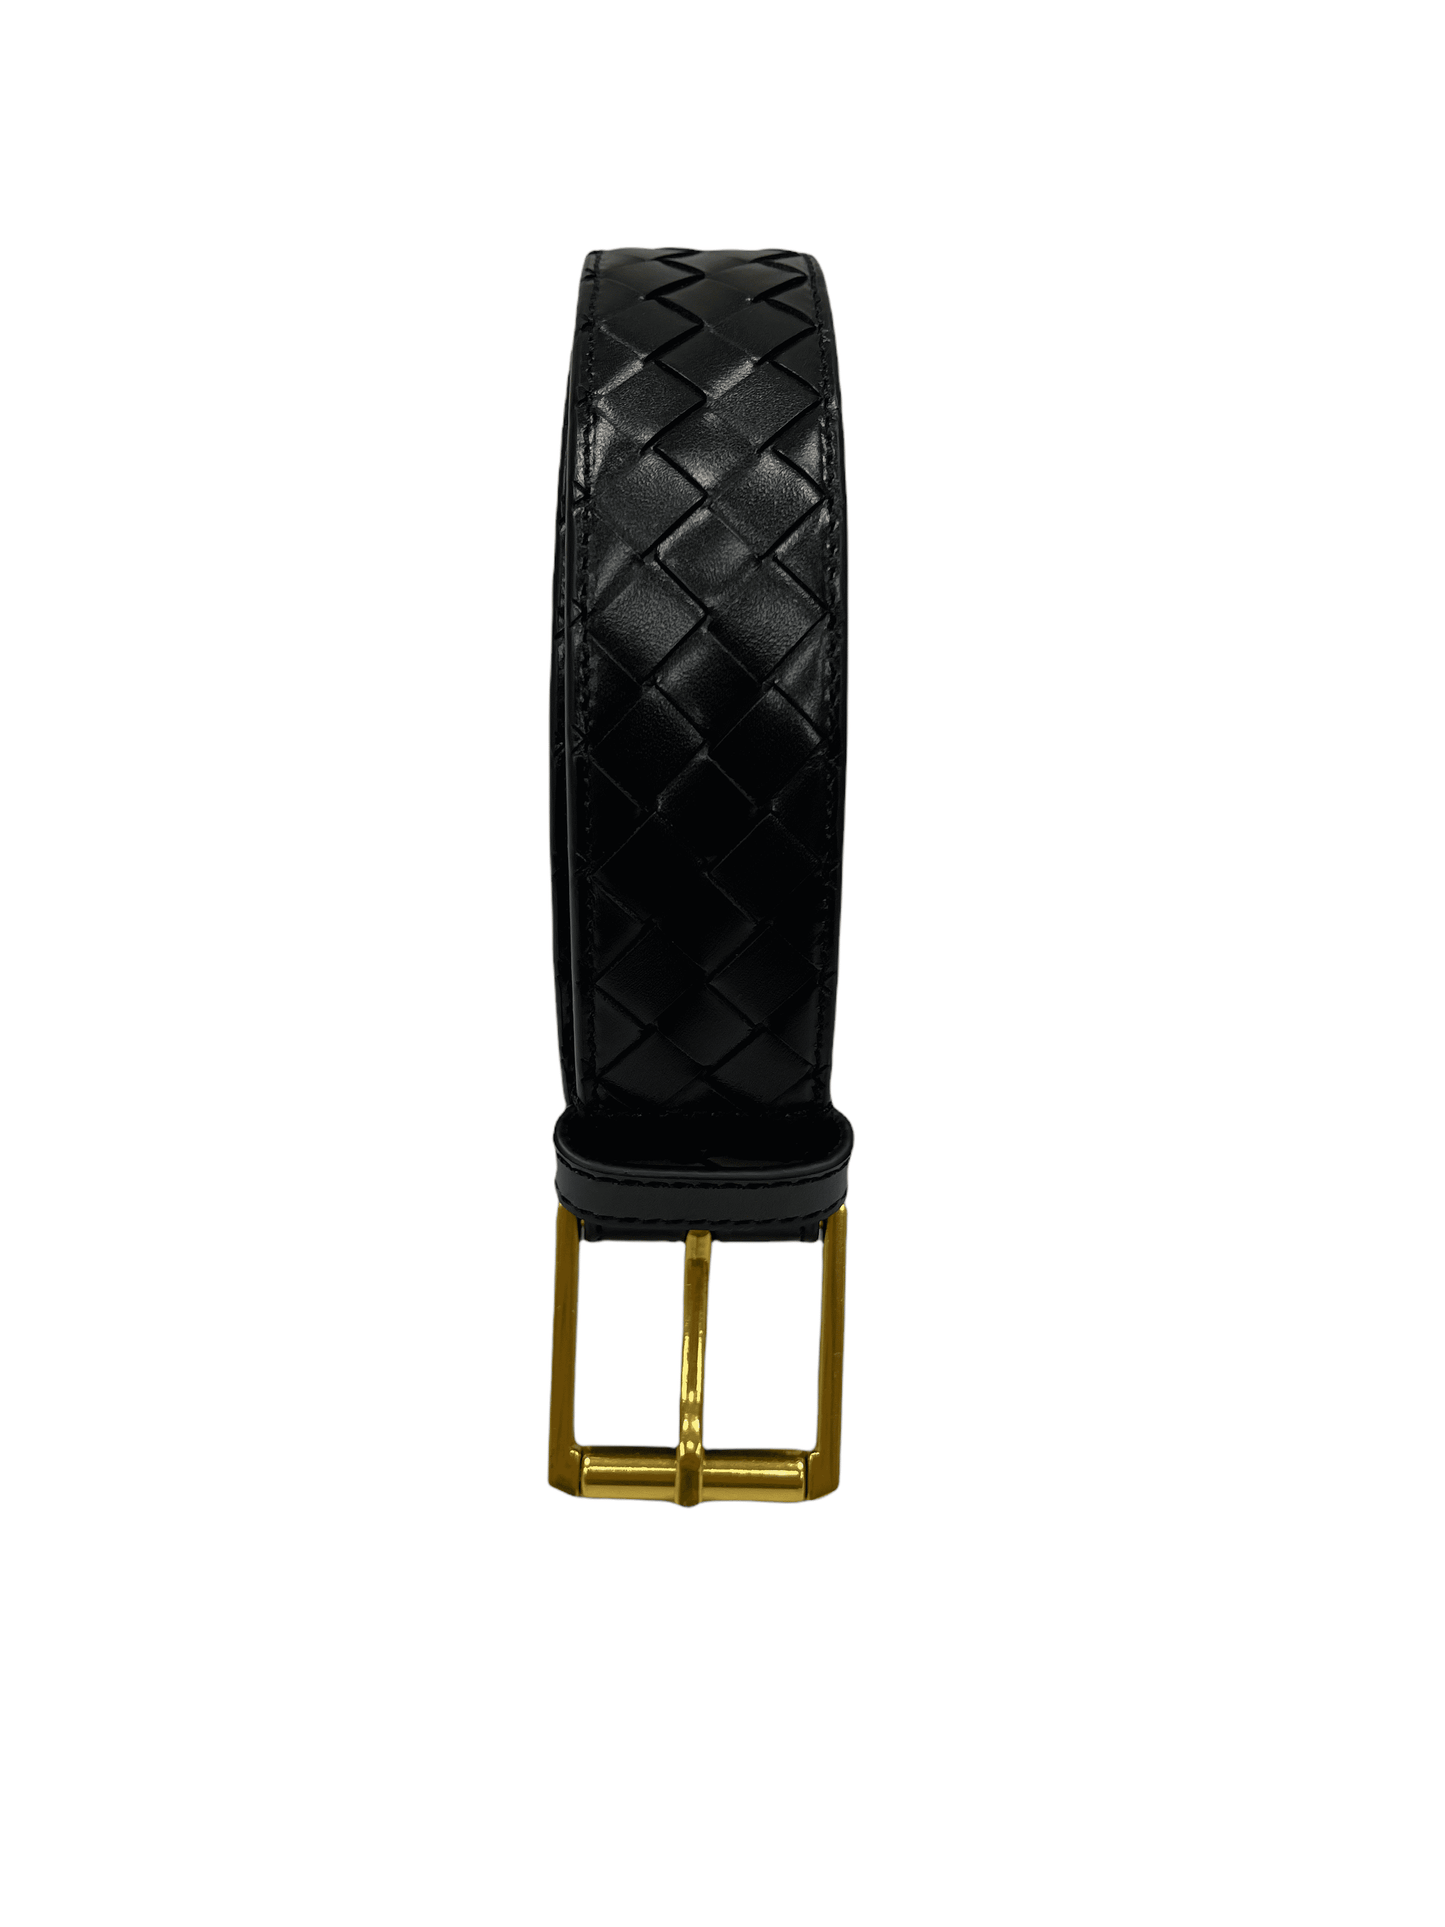 Bottega Veneta Black & Gold Woven Leather Belt 36